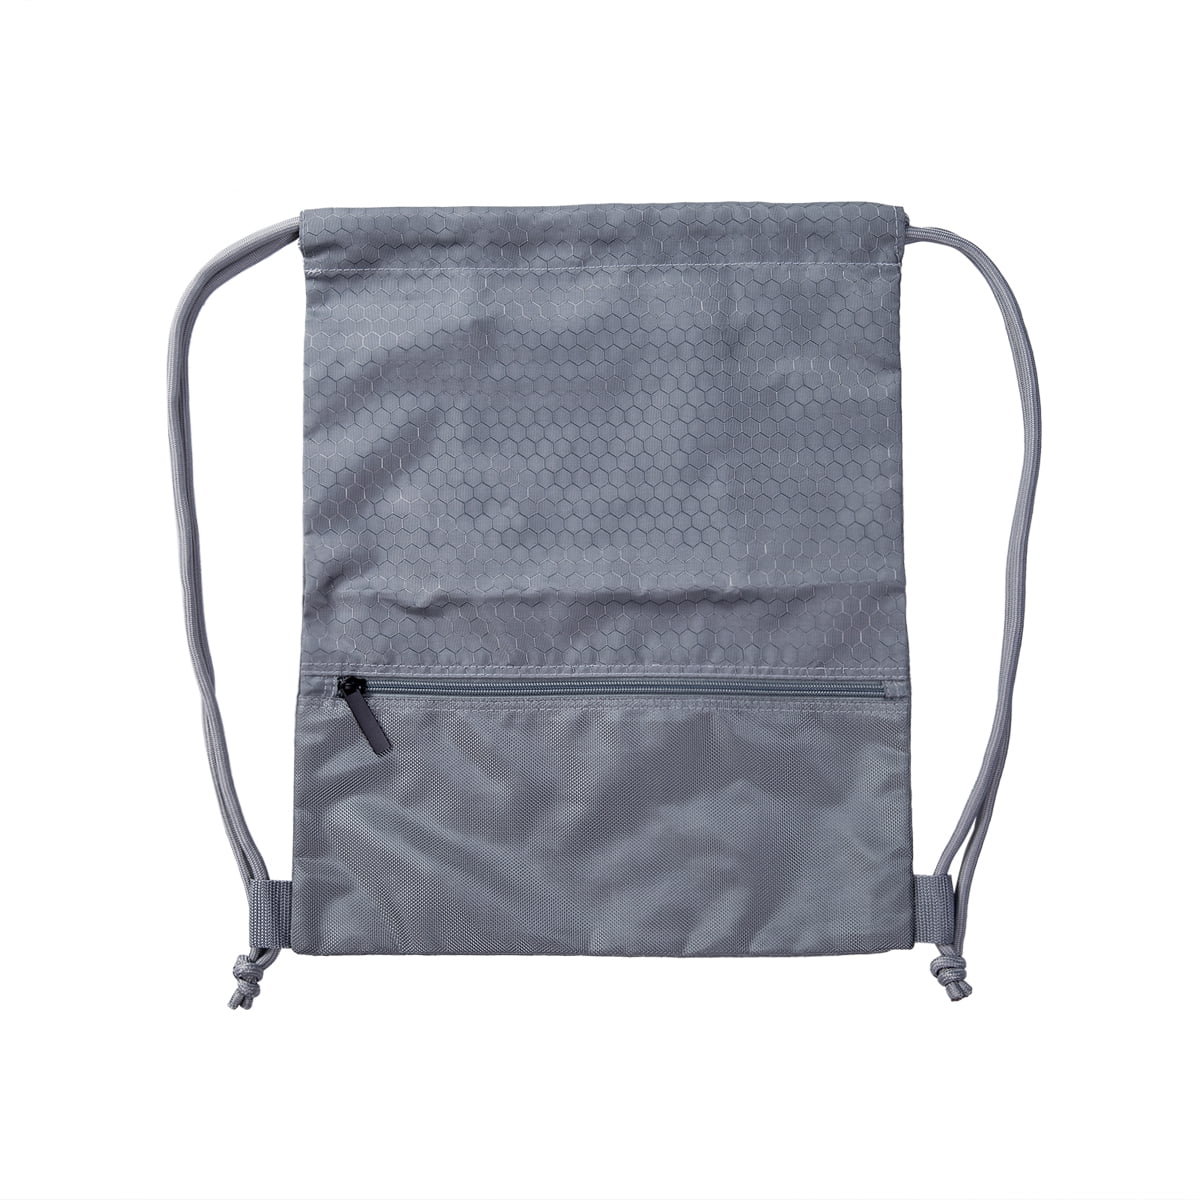 Drawstring Backpack Cinch Sack Bags School Tote Gym Bag Sport Pack Case US 